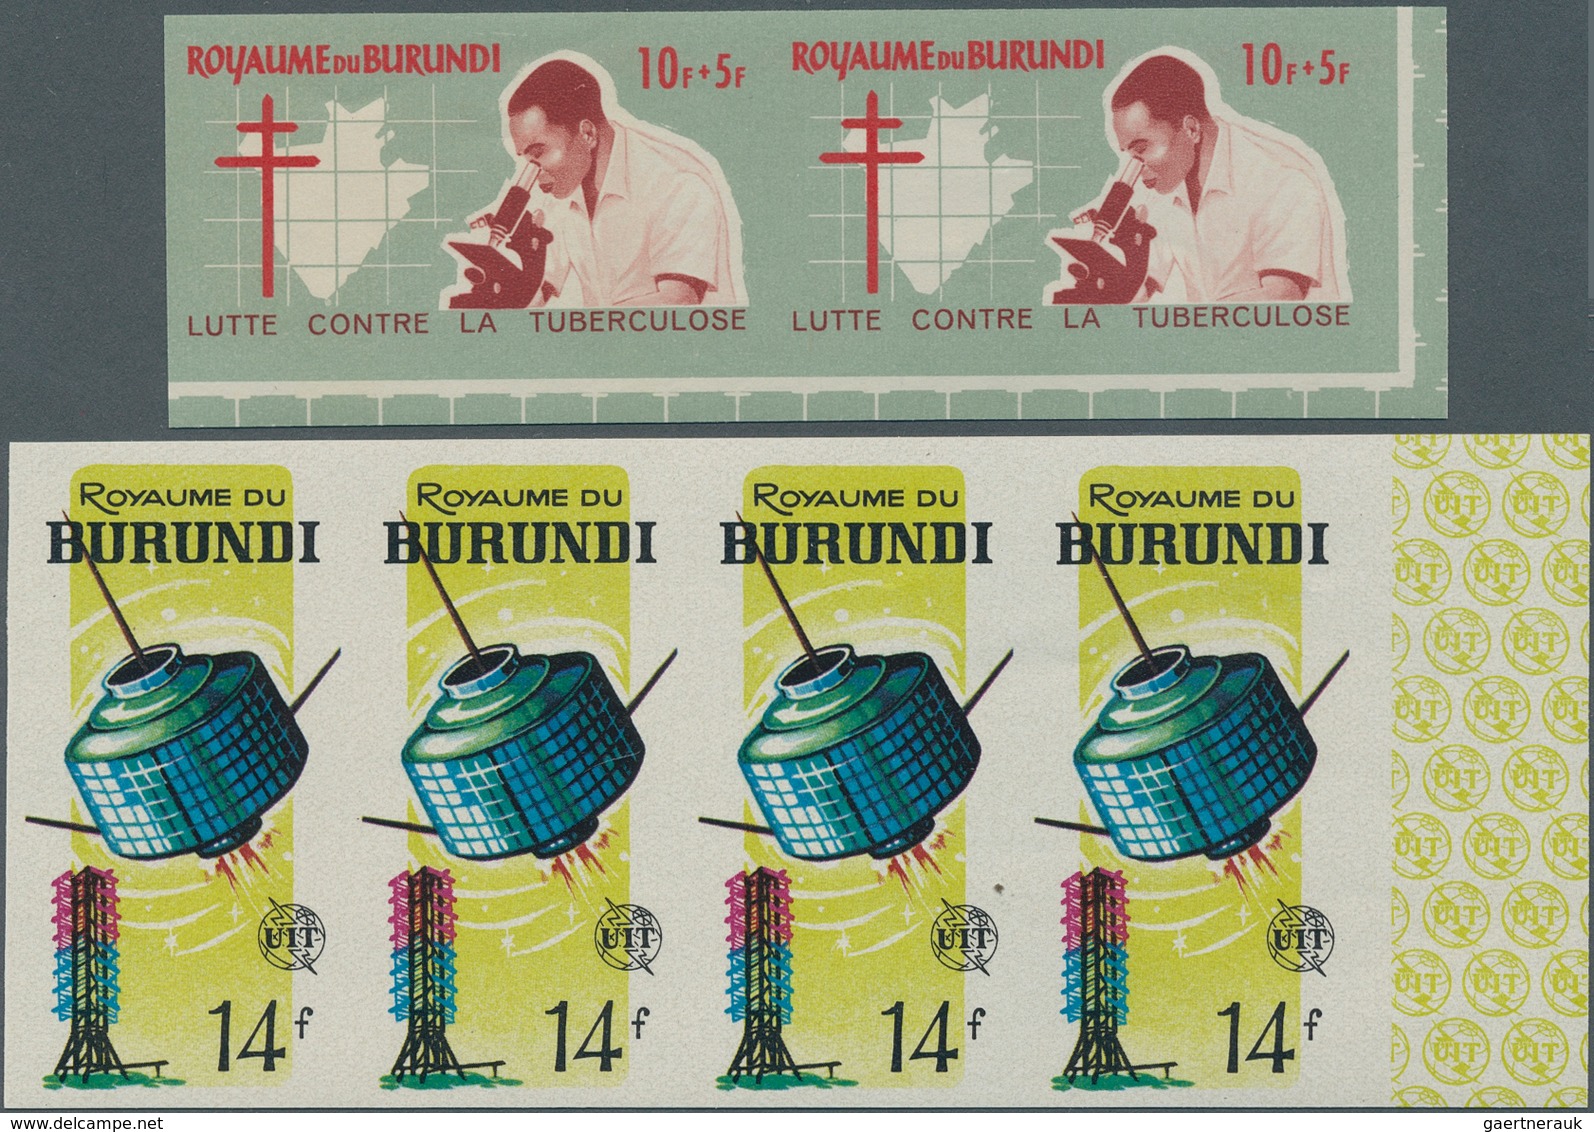 Burundi: 1964/1965, Lot Of 5376 IMPERFORATE Stamps MNH, Showing Various Topics Like Dance, Medicine, - Verzamelingen